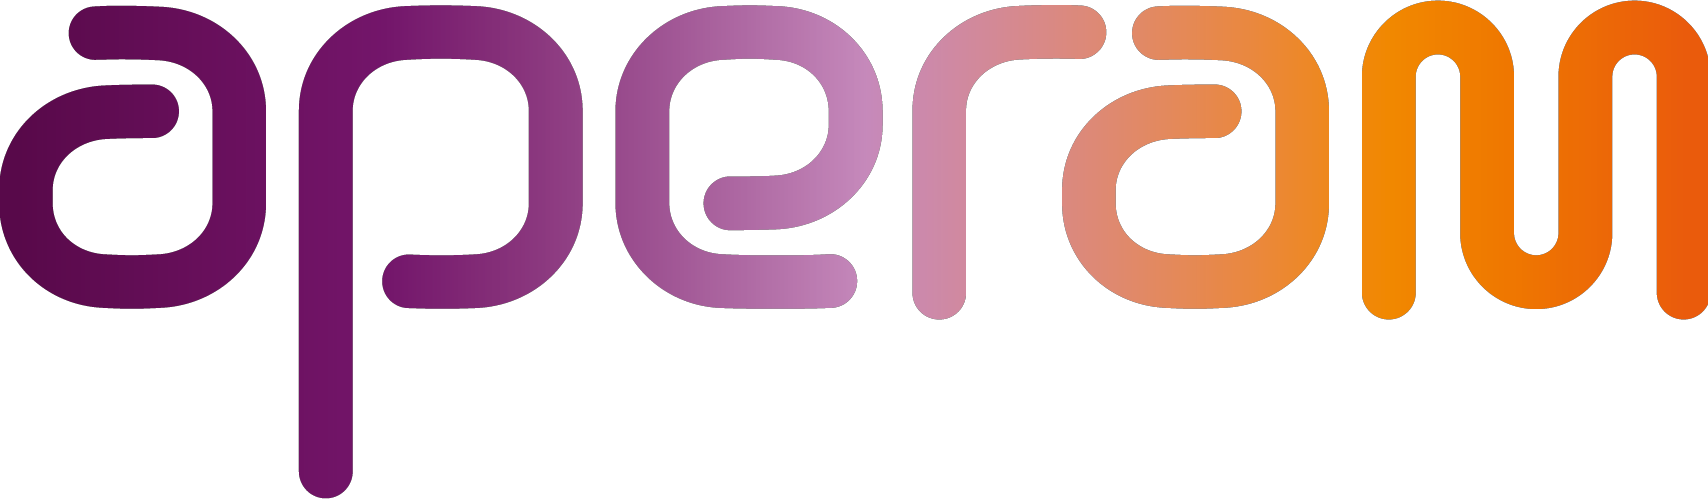 Aperam logo large (transparent PNG)